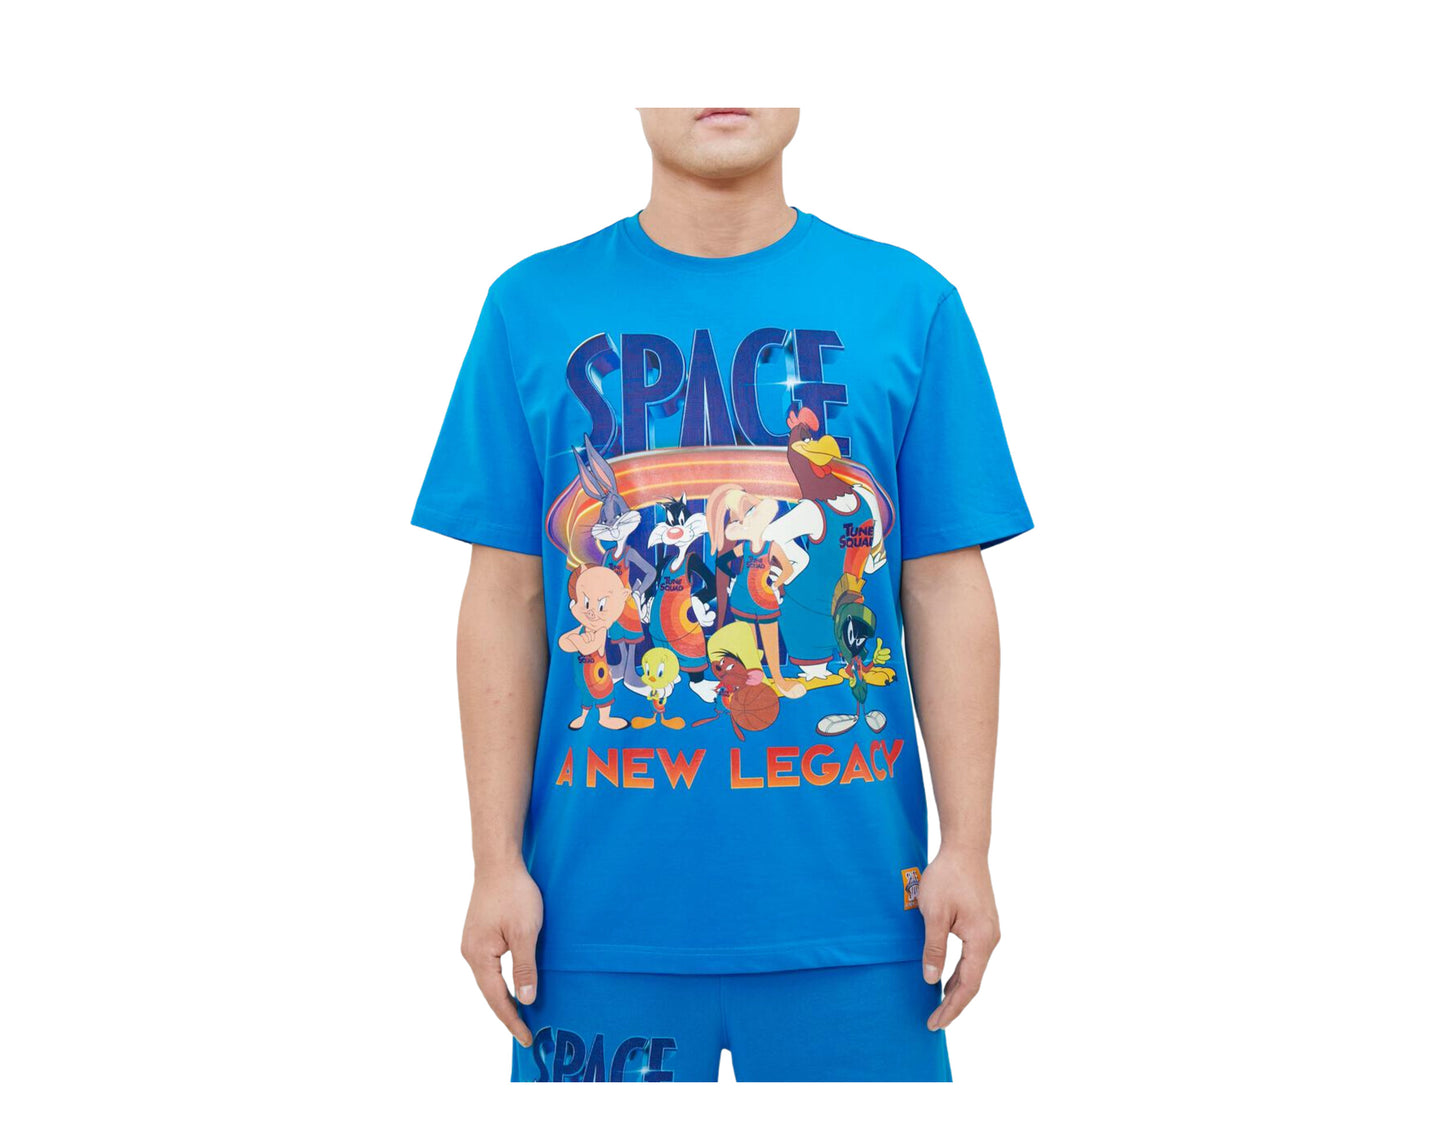 Freeze Max Space Jam 2 - A New Legacy Men's Tee Shirt